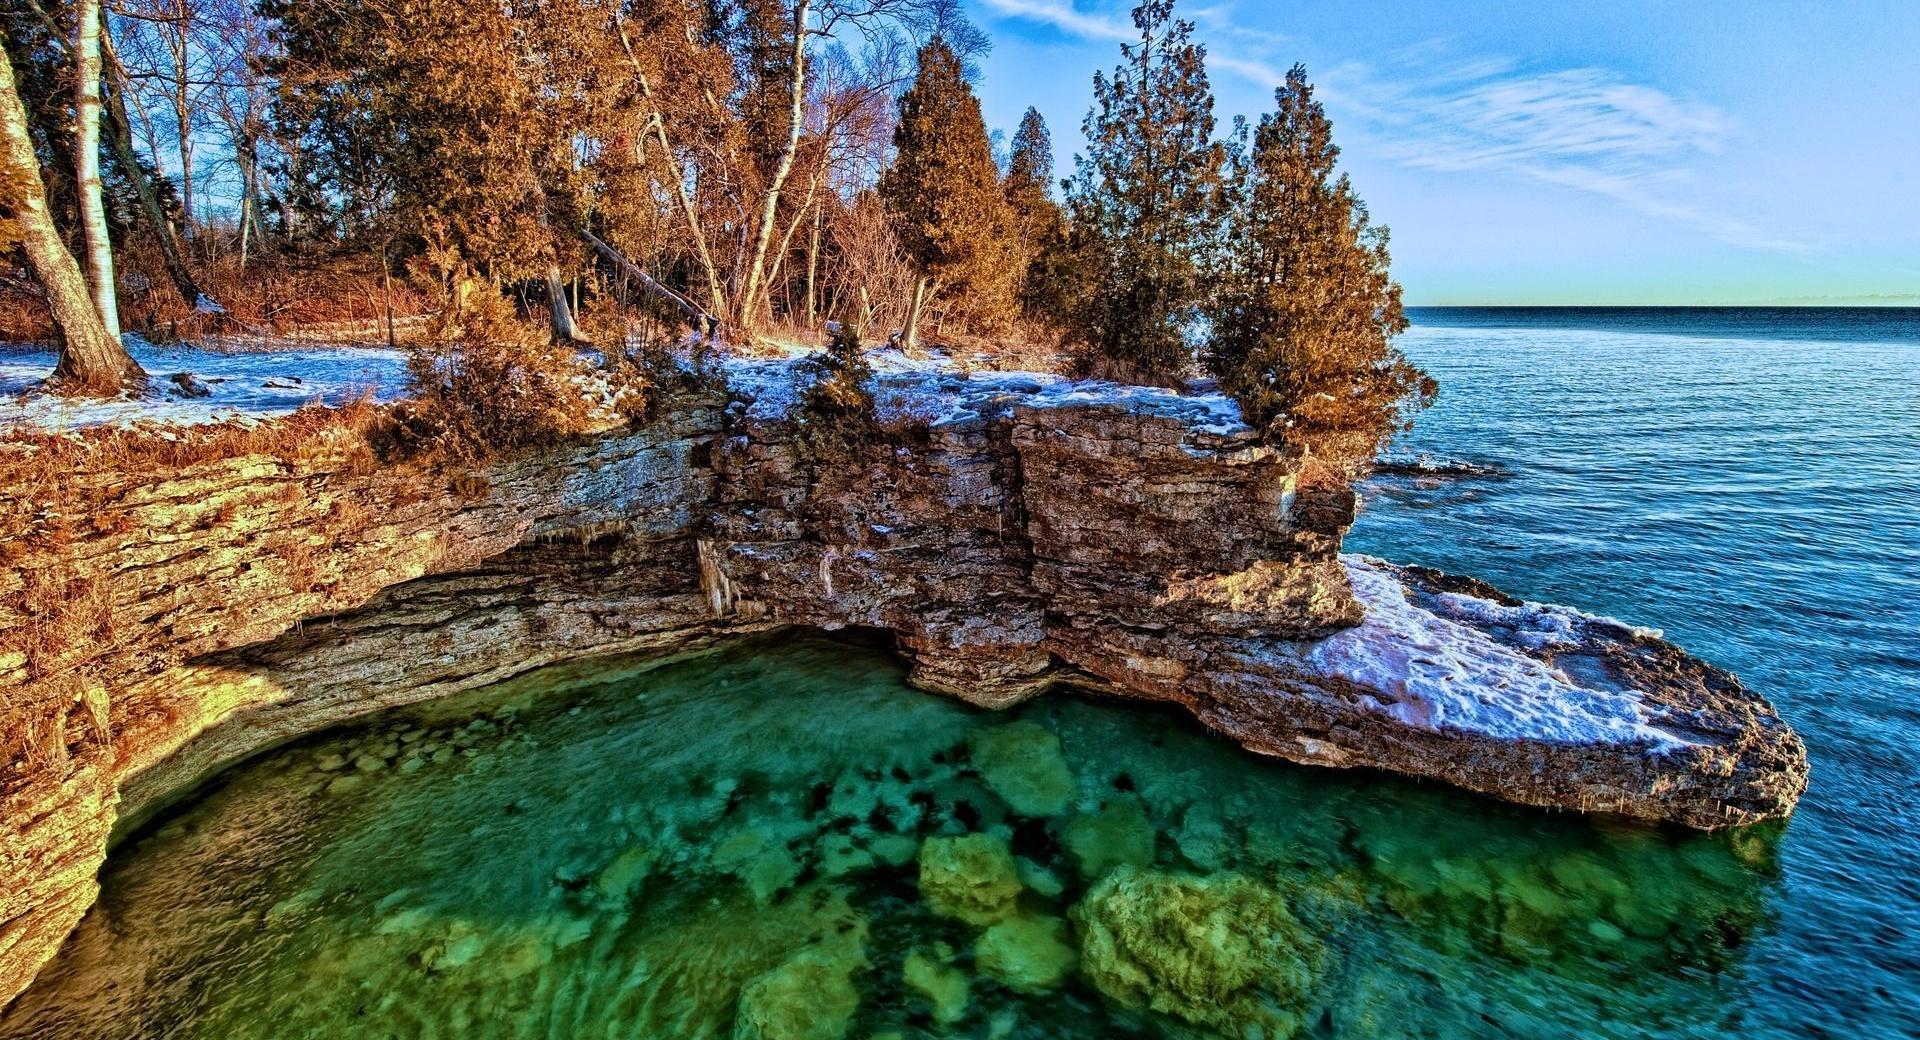 Lake Michigan at 1600 x 1200 size wallpapers HD quality